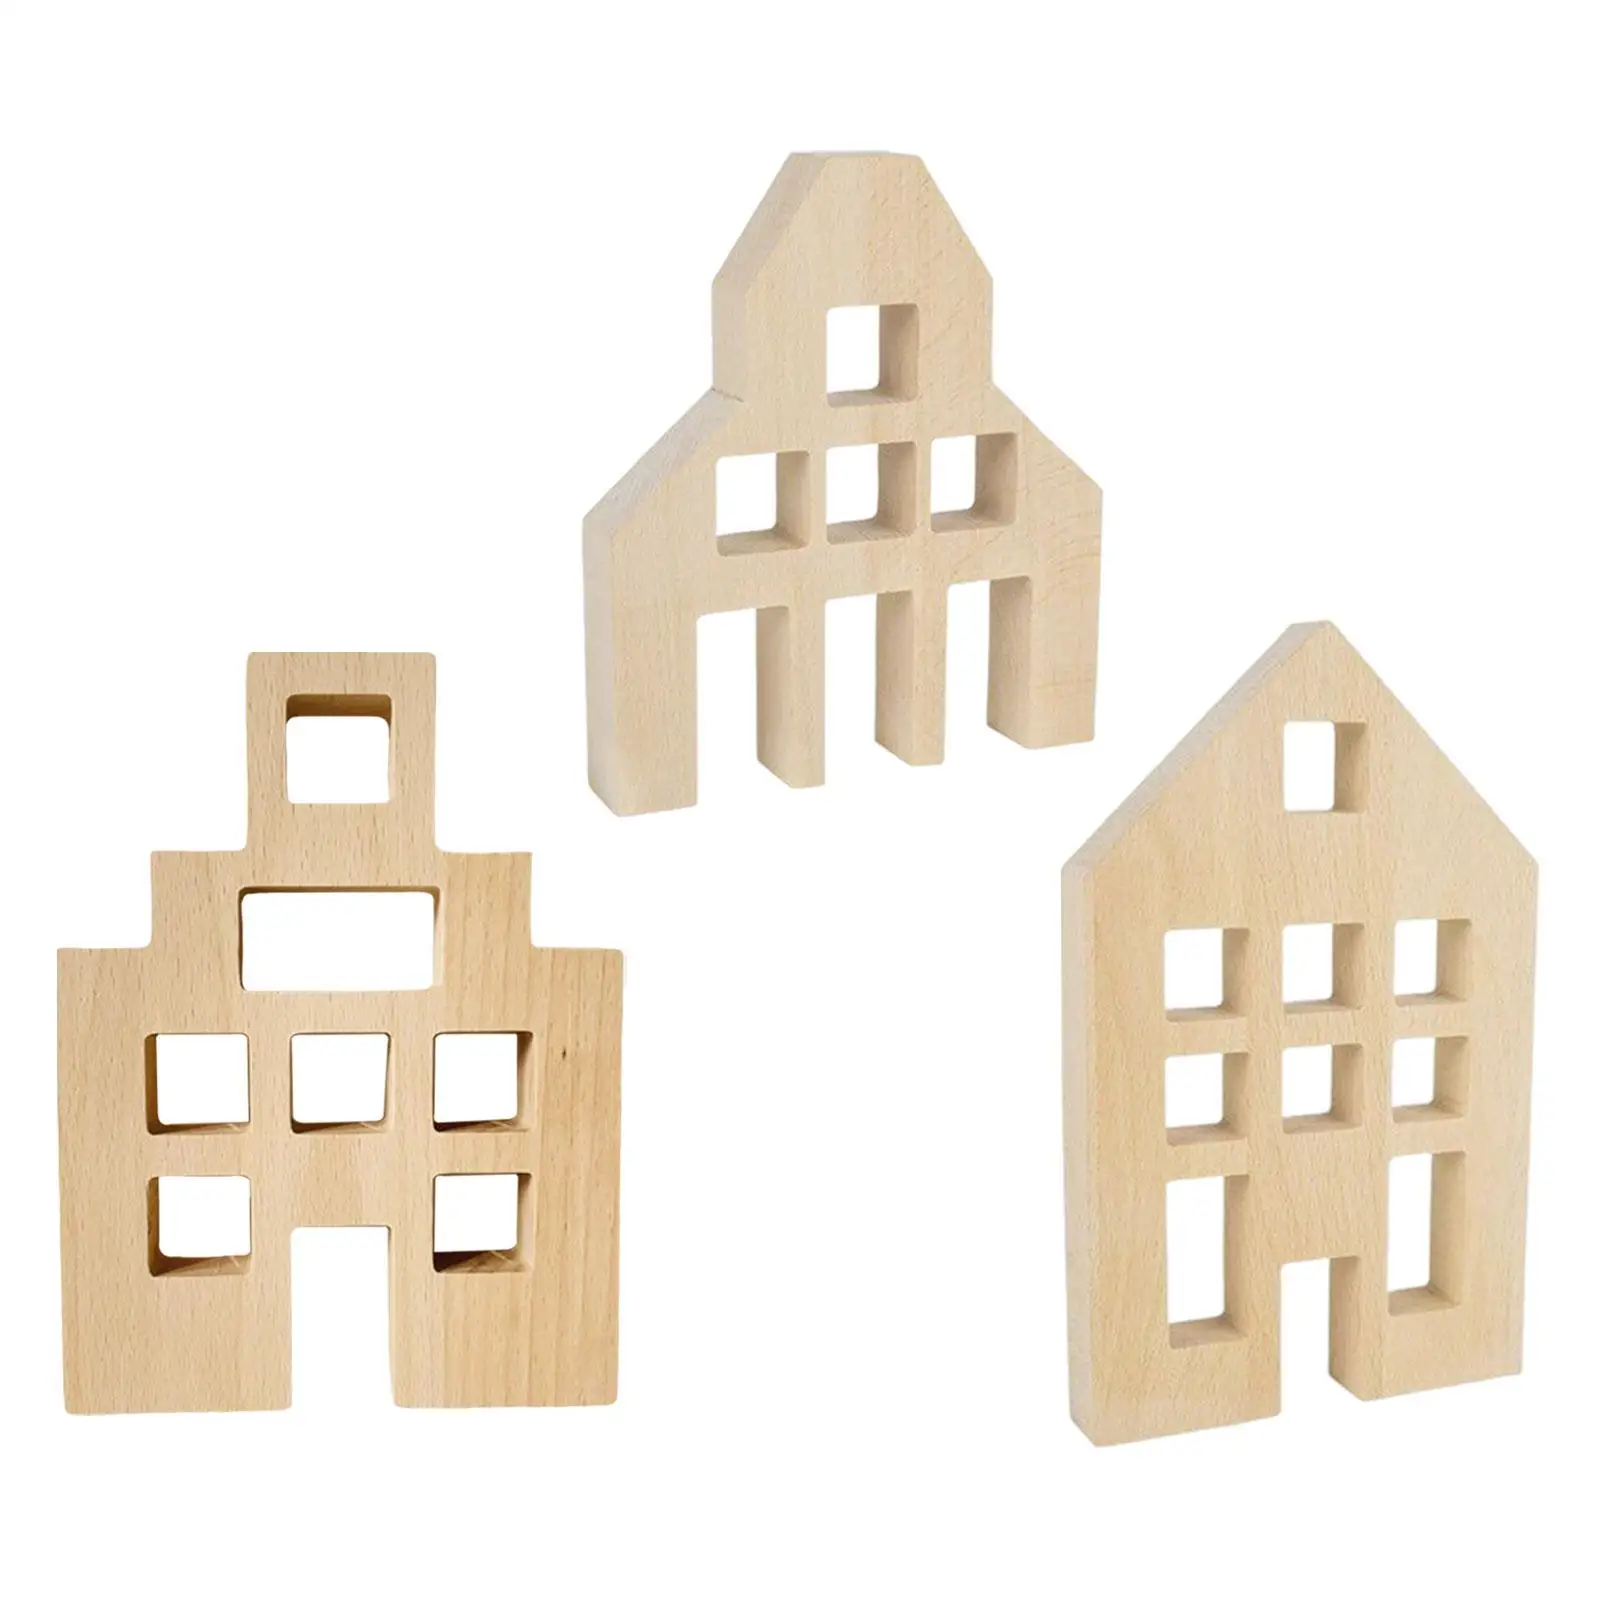 3 Pieces Wood House Educational Sensory Toys Wood Stem Decorative Centerpiece for Preschool Kids Party Favors Ages 3-6 Bedroom